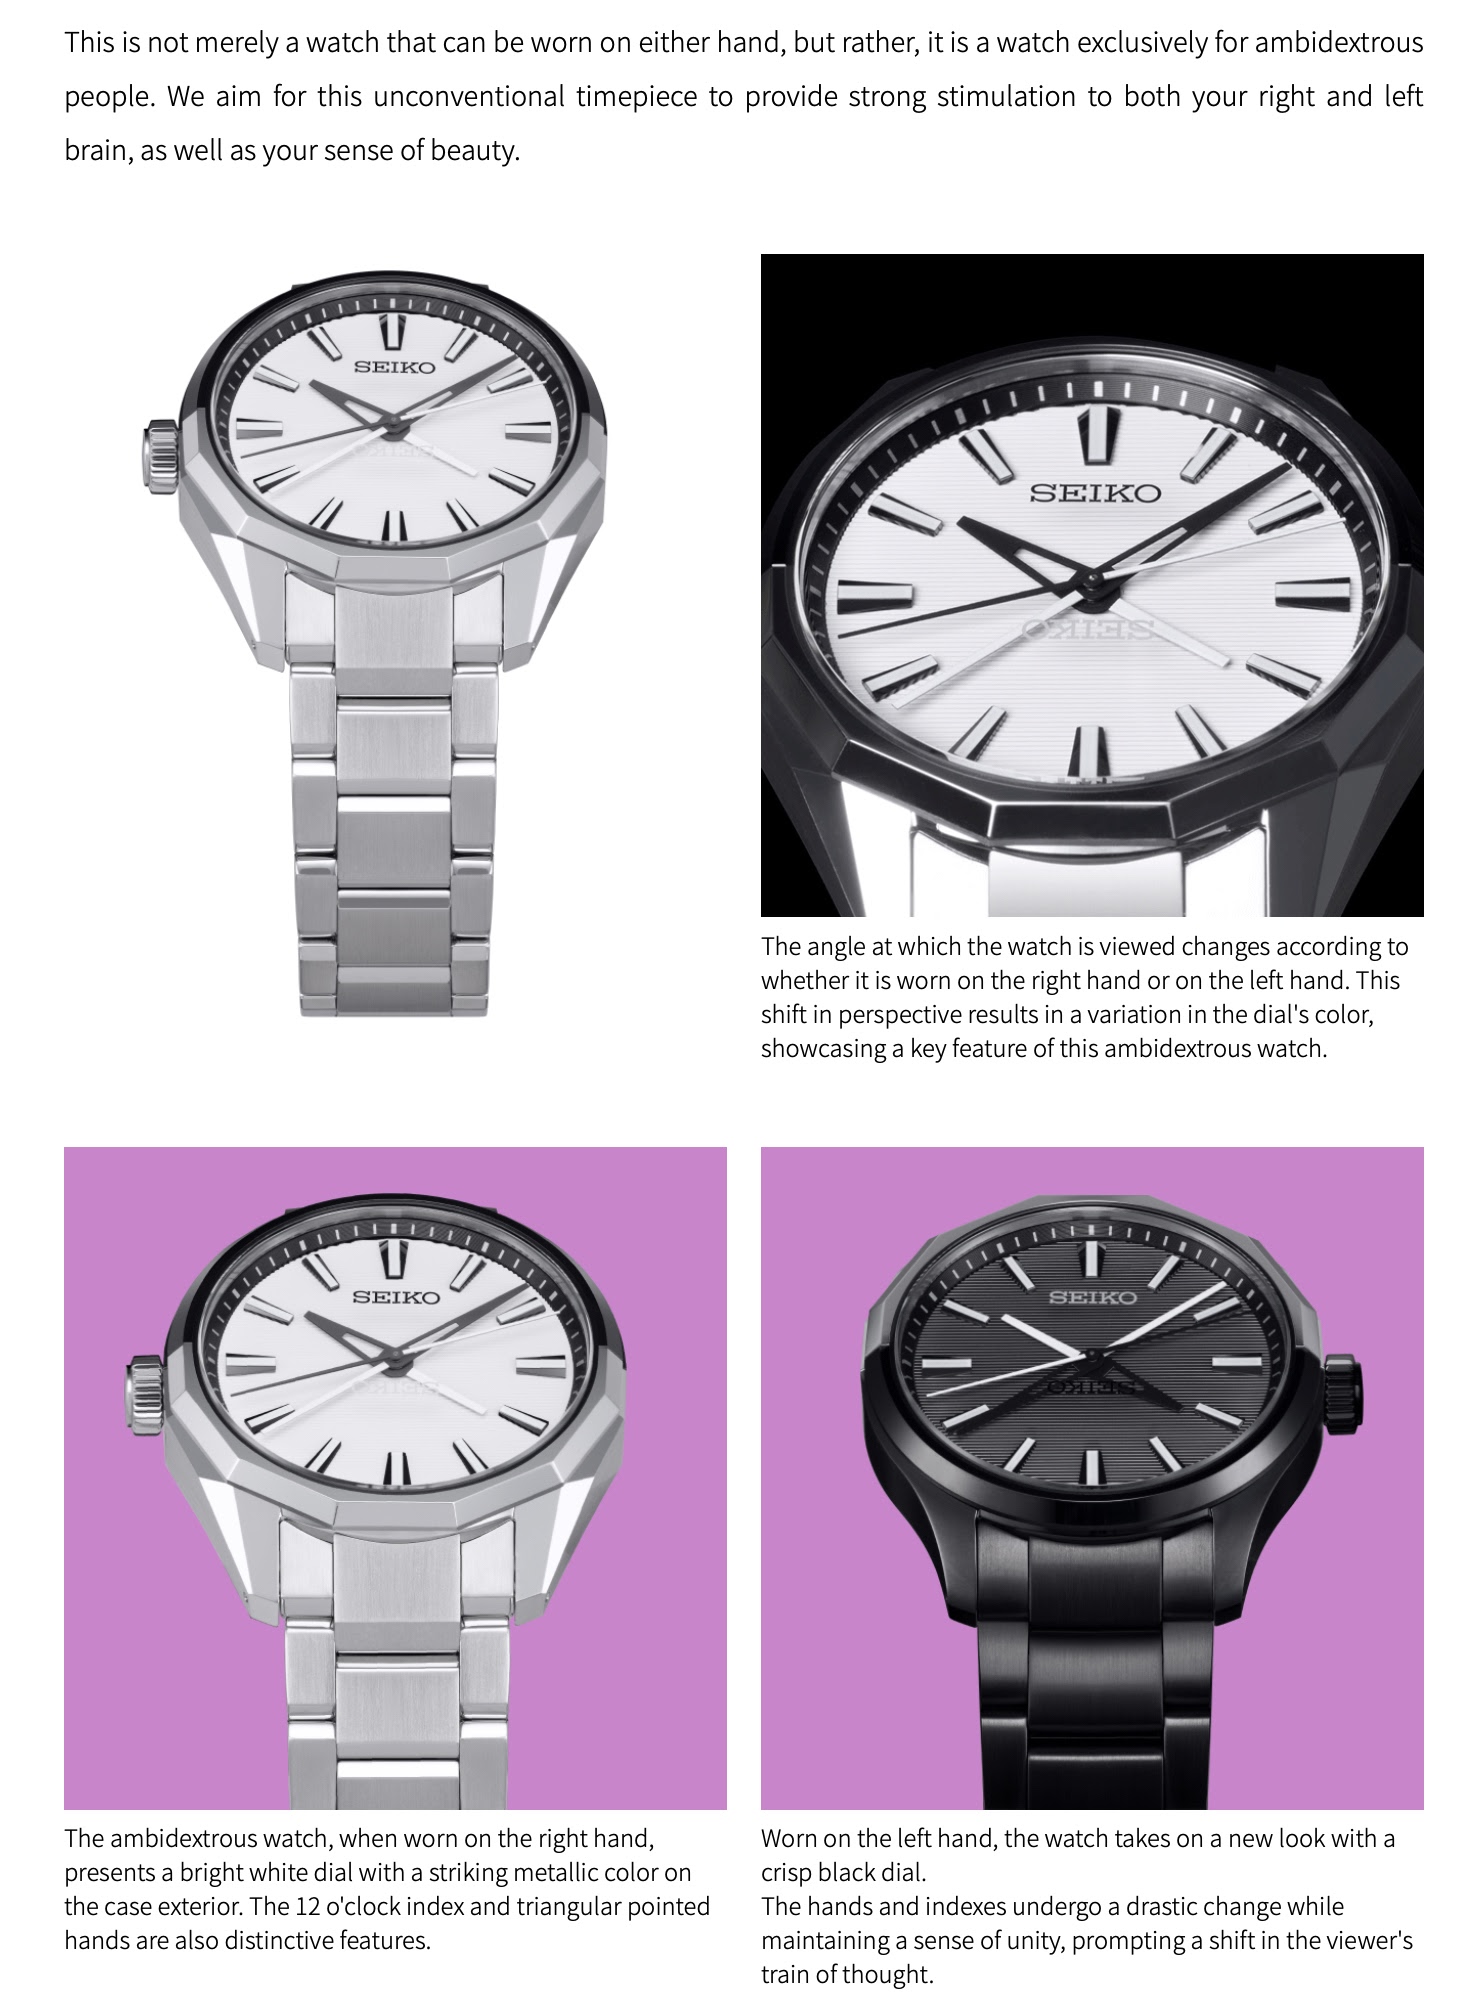 Kodak Watch Olympics Official Sponsor vtg wristwatch gold face time piece  USA us | eBay